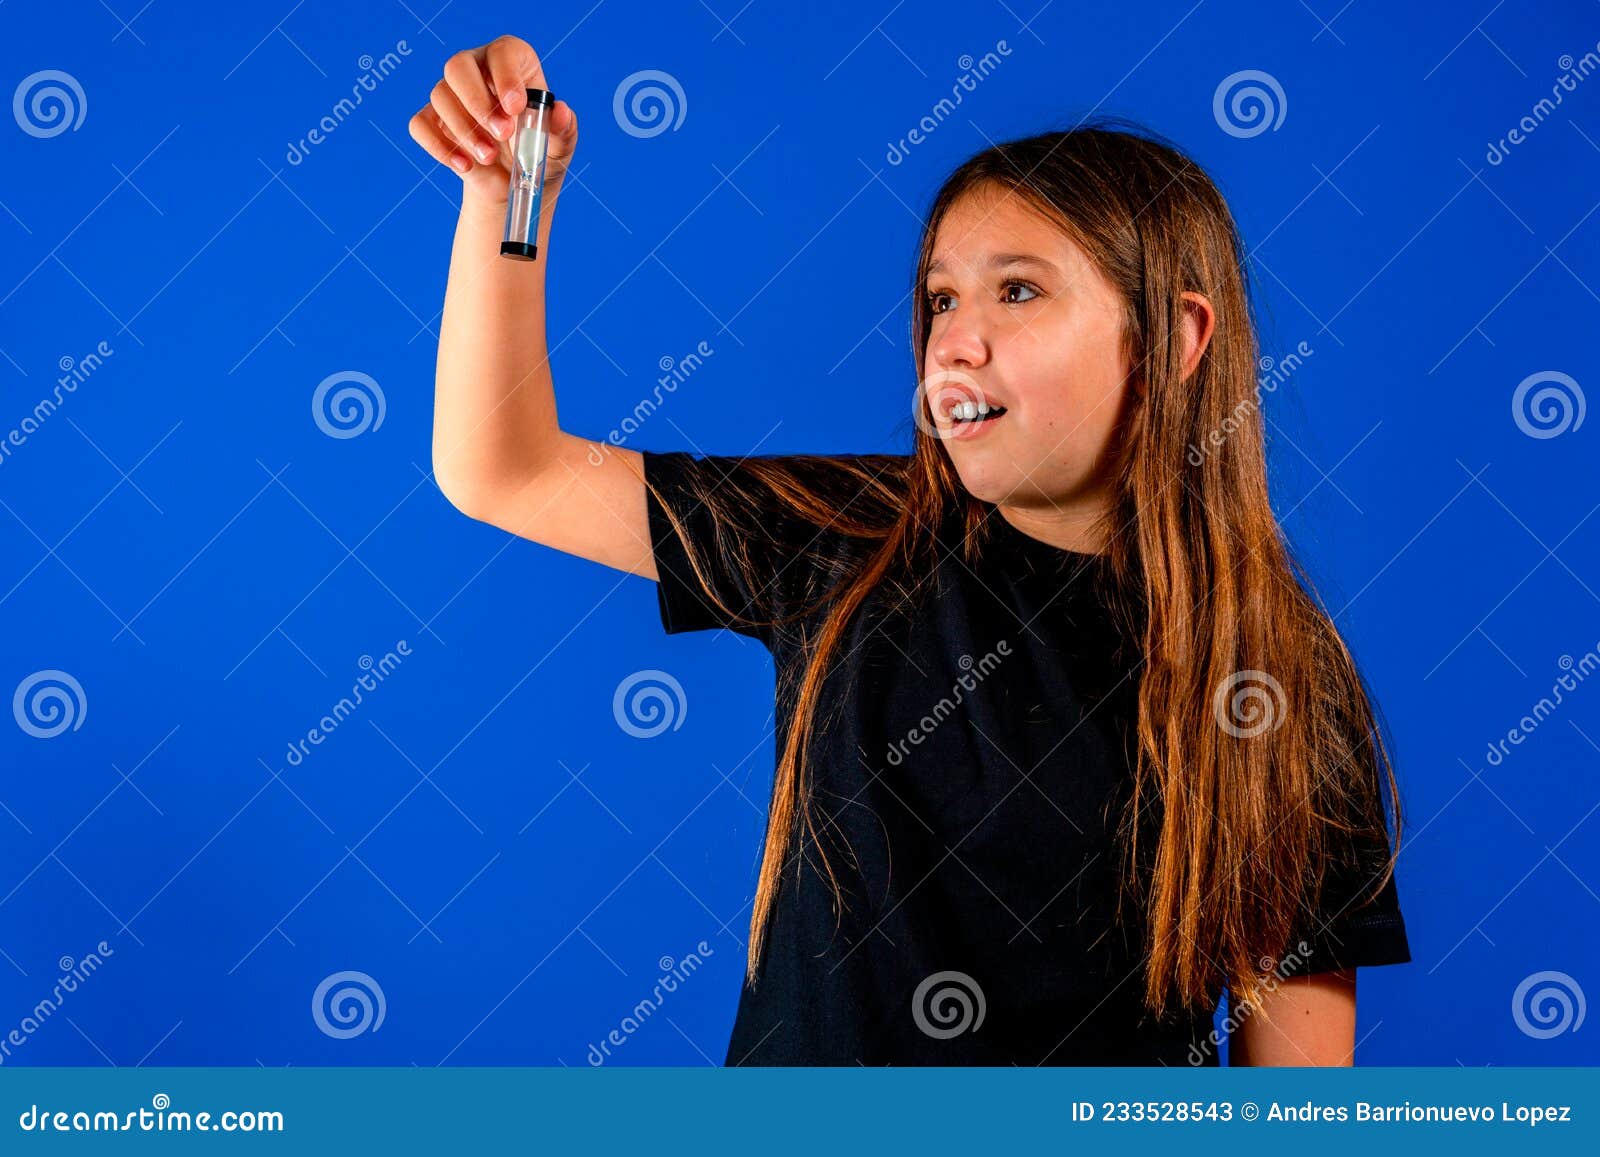 little caucasian girl holding an hourglass over blue estudio background